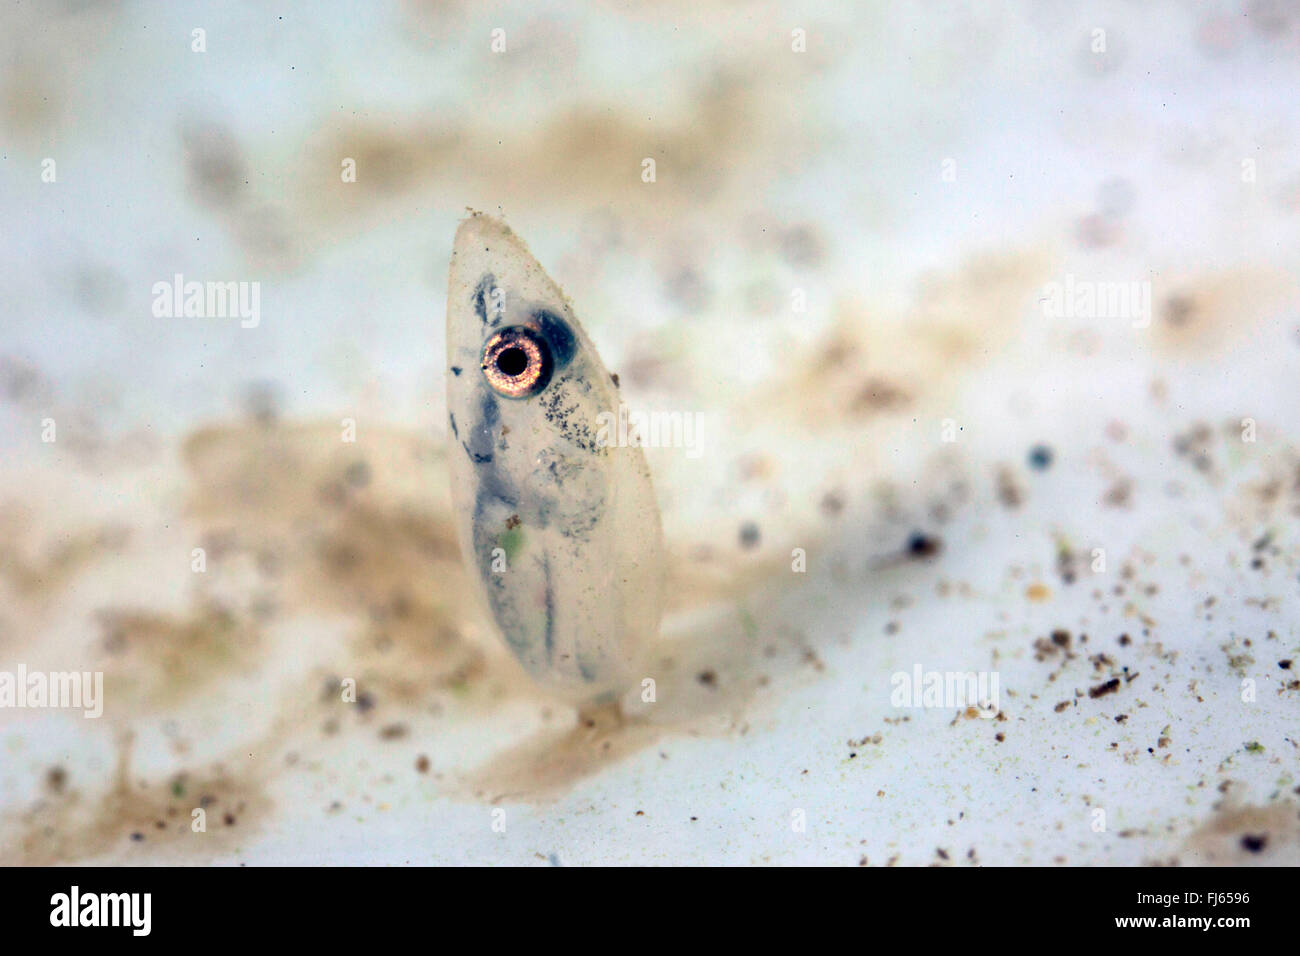 Tubenose Grundel (Proterorhinus Marmoratus, Gobius Marmoratus), Ei mit Larve kurz vor dem schlüpfen Stockfoto